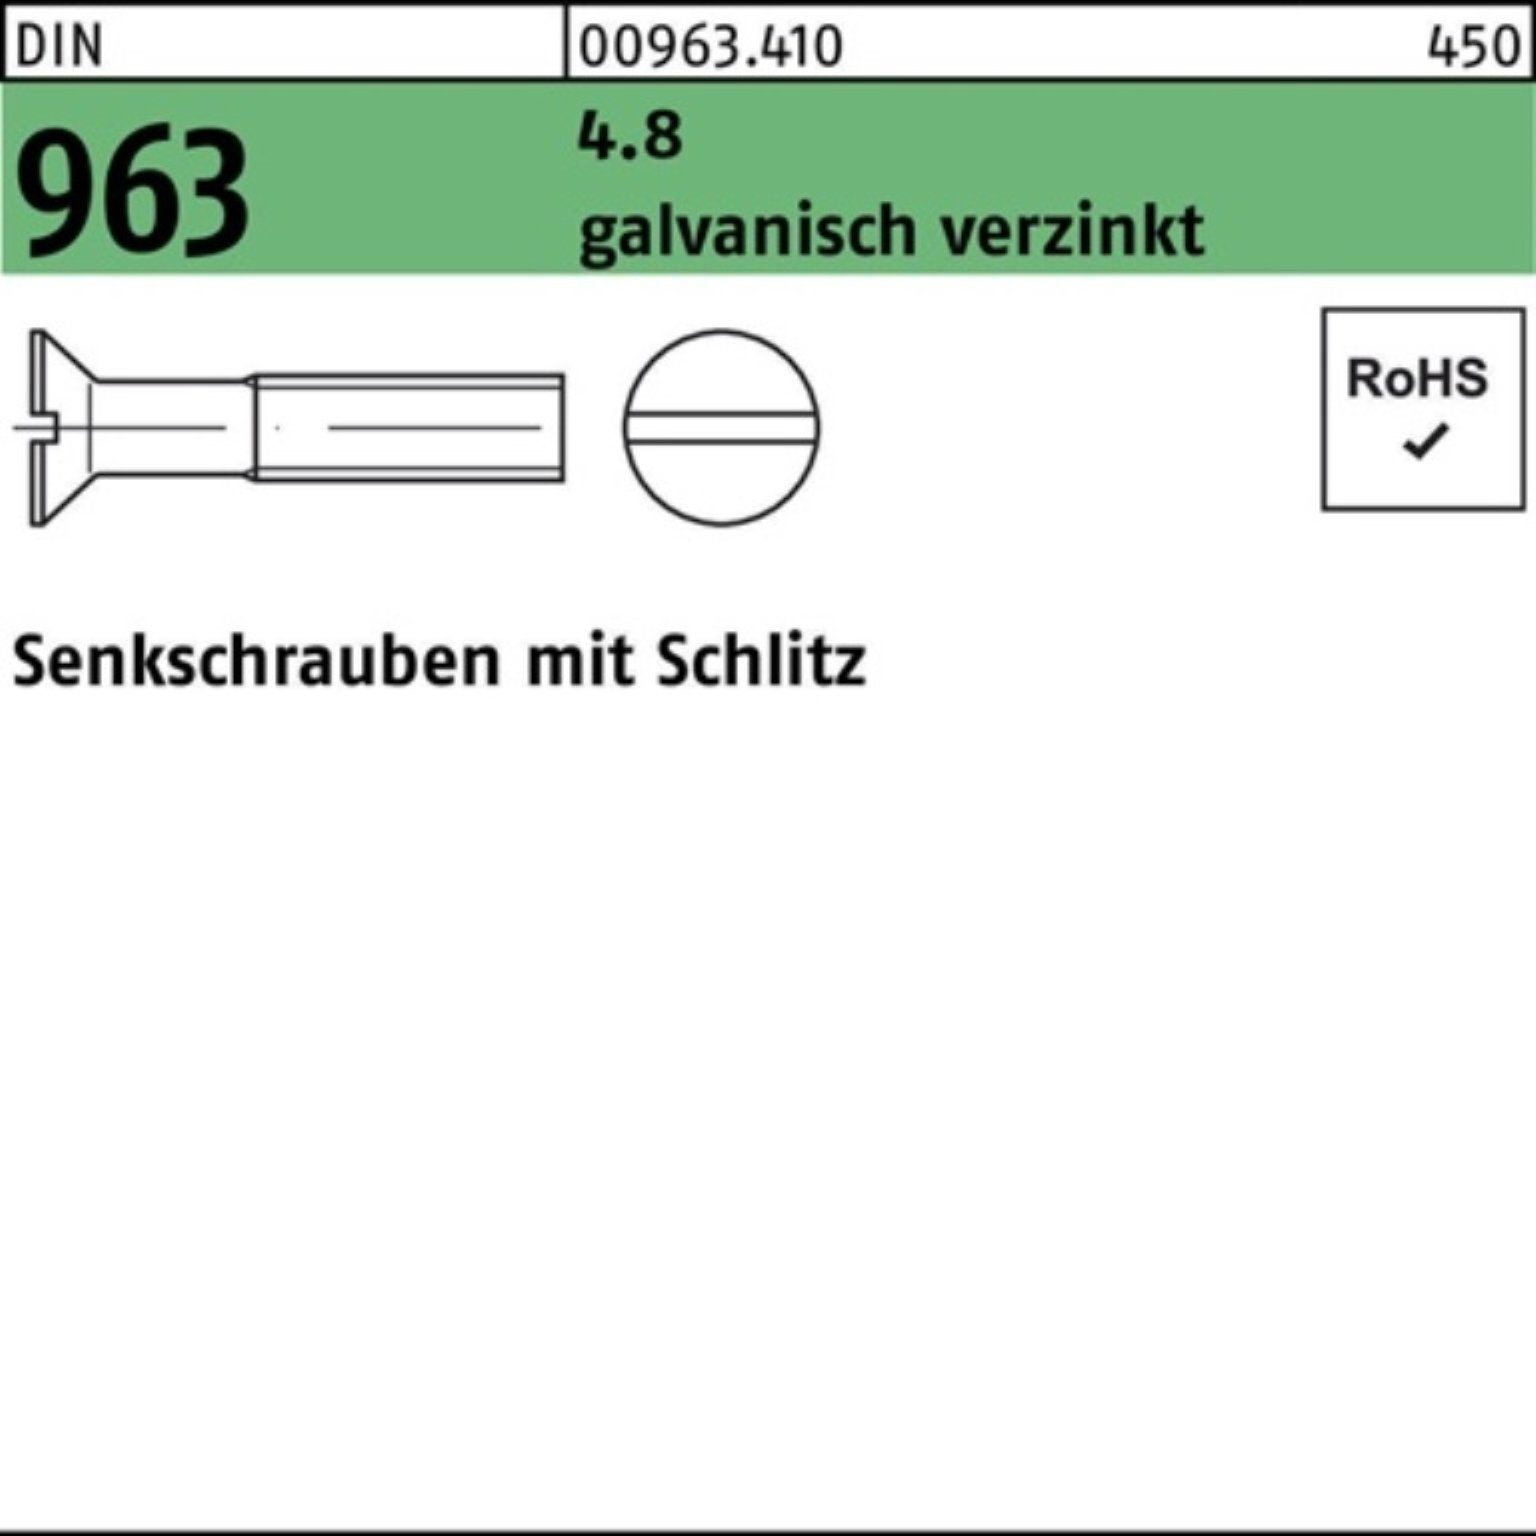 Reyher Senkschraube 100er Pack Senkschraube DIN 963 Schlitz M8x 20 4.8 galv.verz. 100 Stü